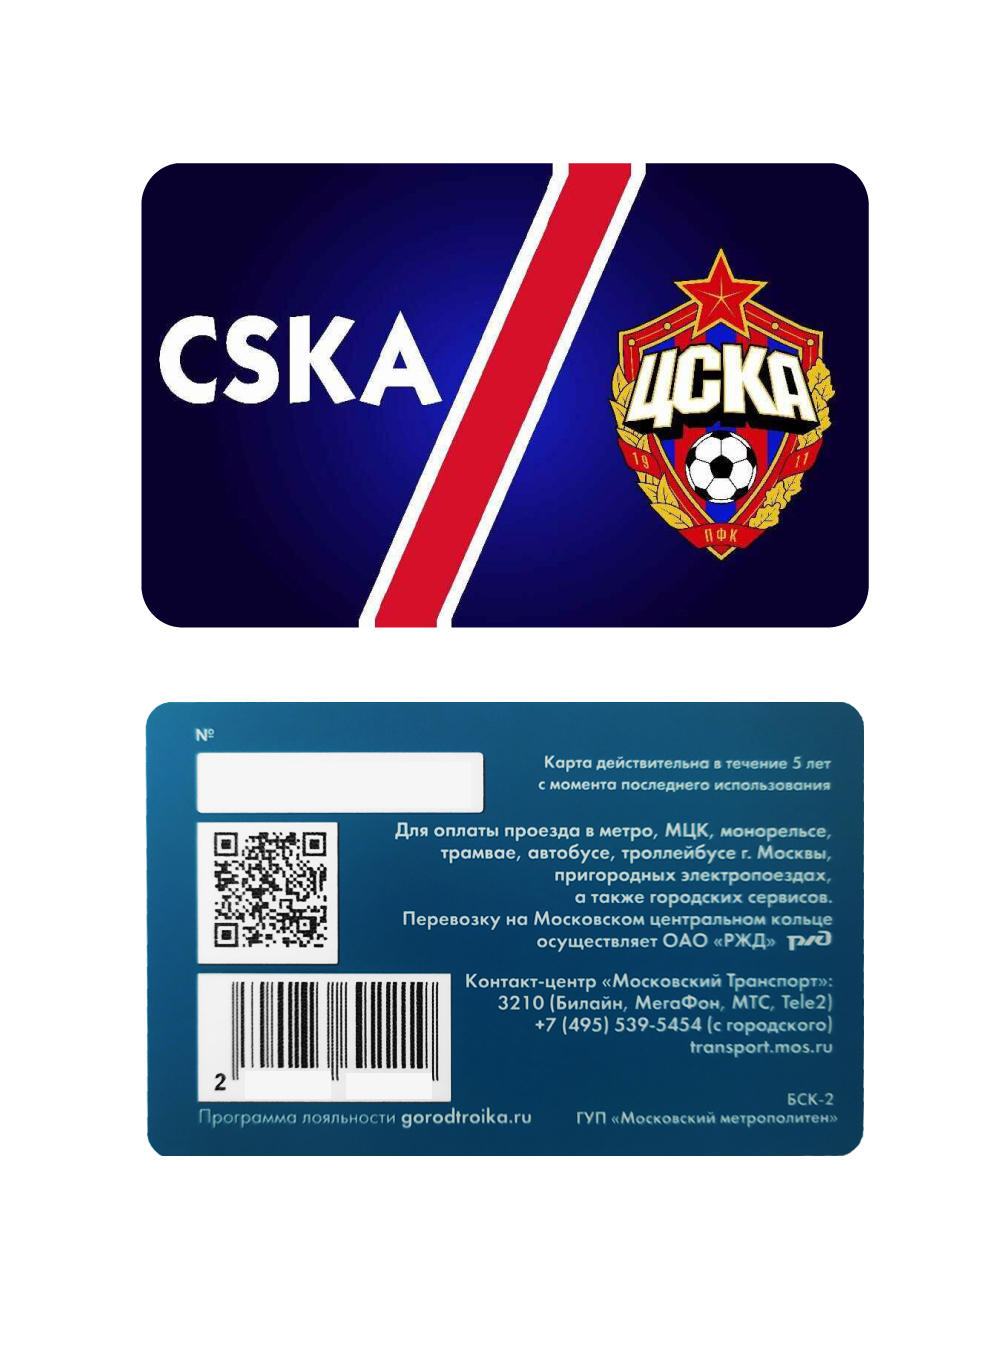 Карта-тройка "CSKA" от Cskashop